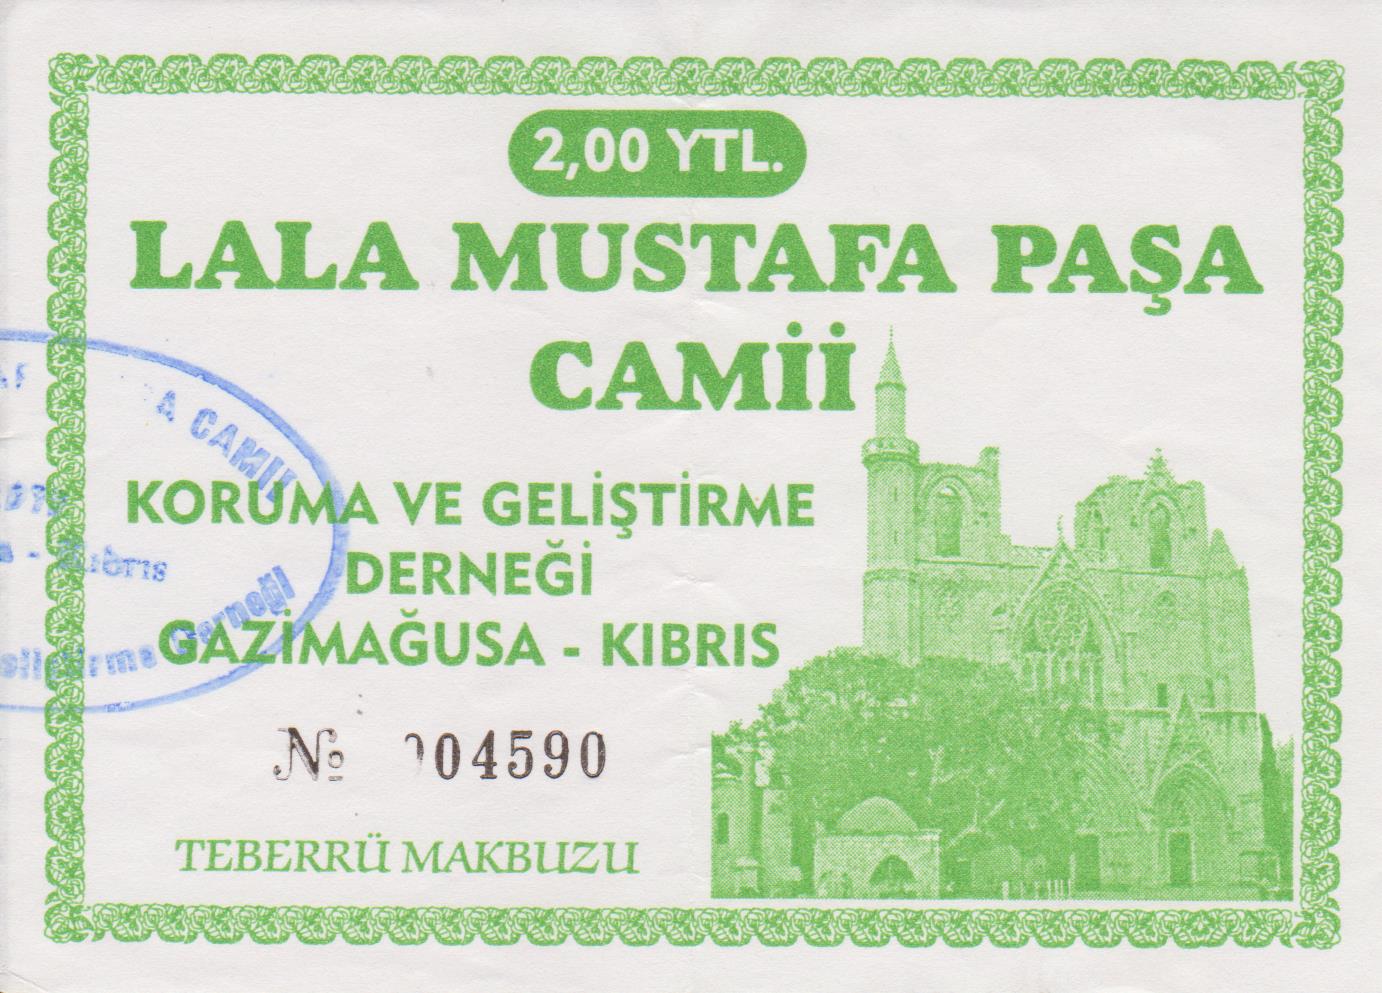 41) Lala Mustafa Pasha Camii